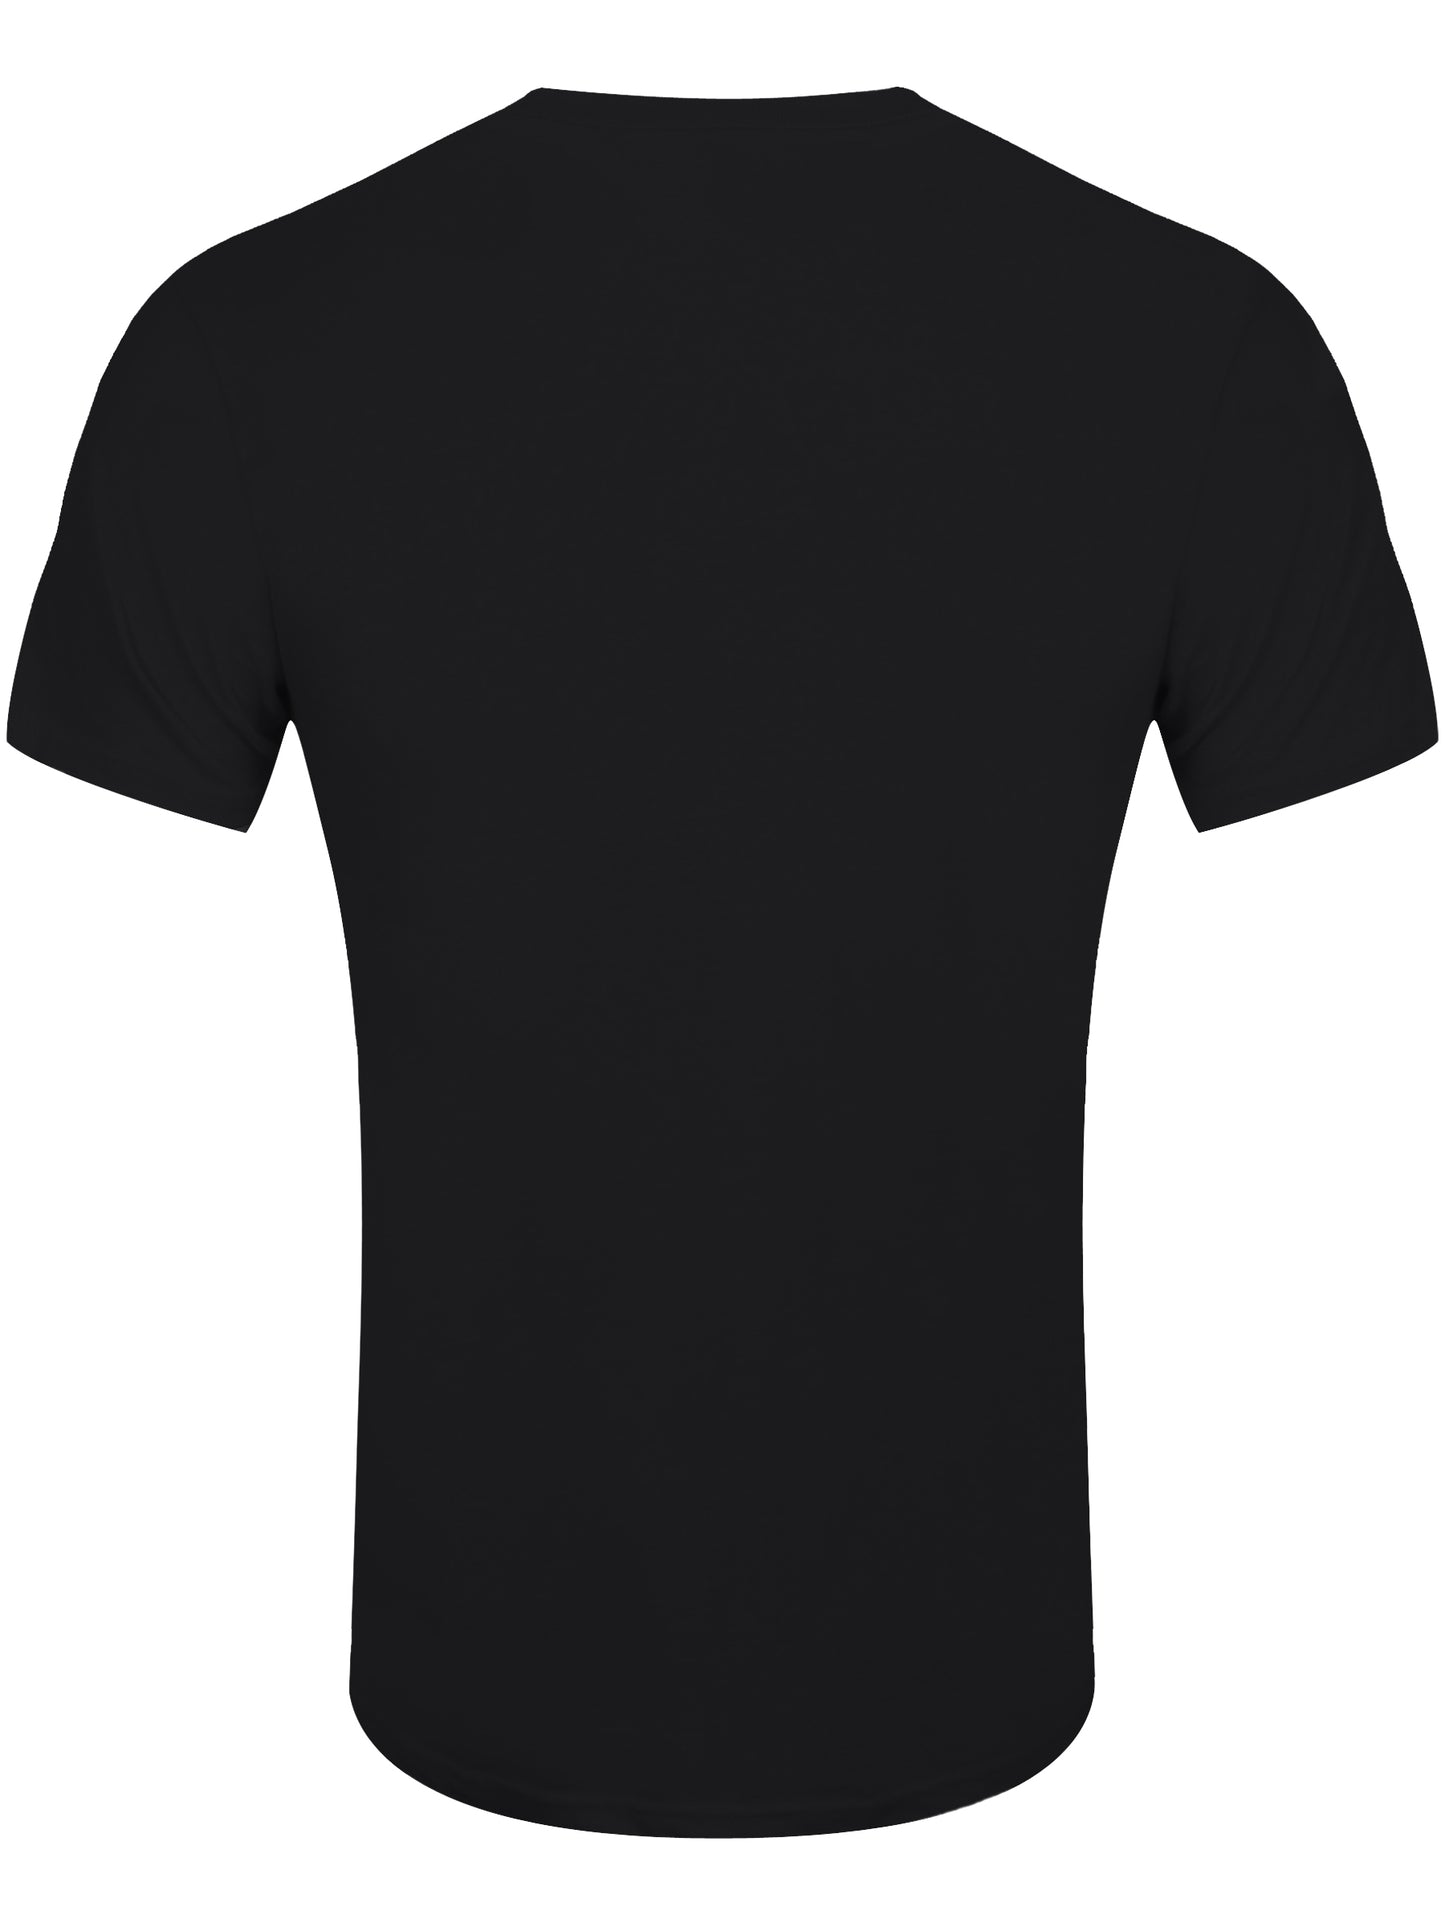 Nightmare Before Christmas Silhouette Men's Black T-Shirt